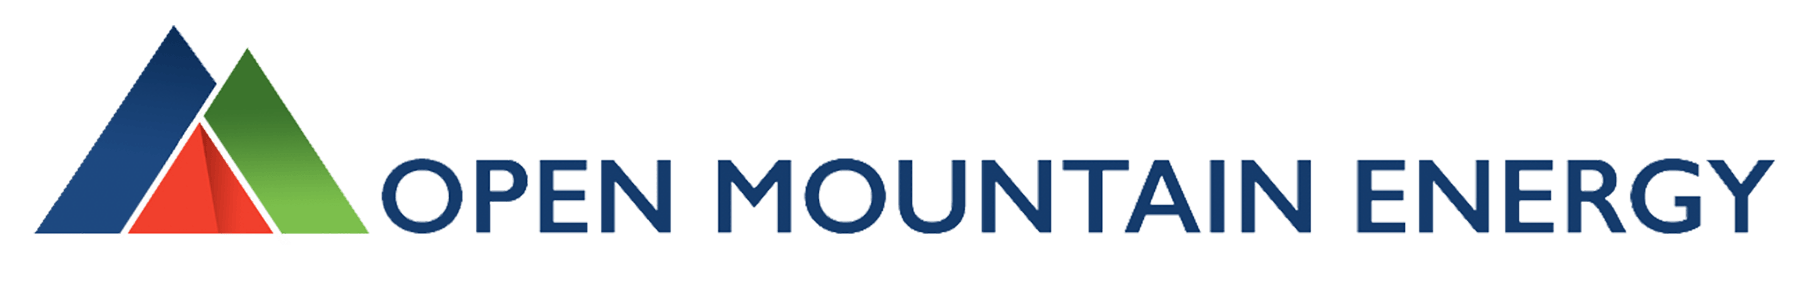 Mountain Energy Logo - Developing Renewable and Sustainable Goethermal Energy Solutions